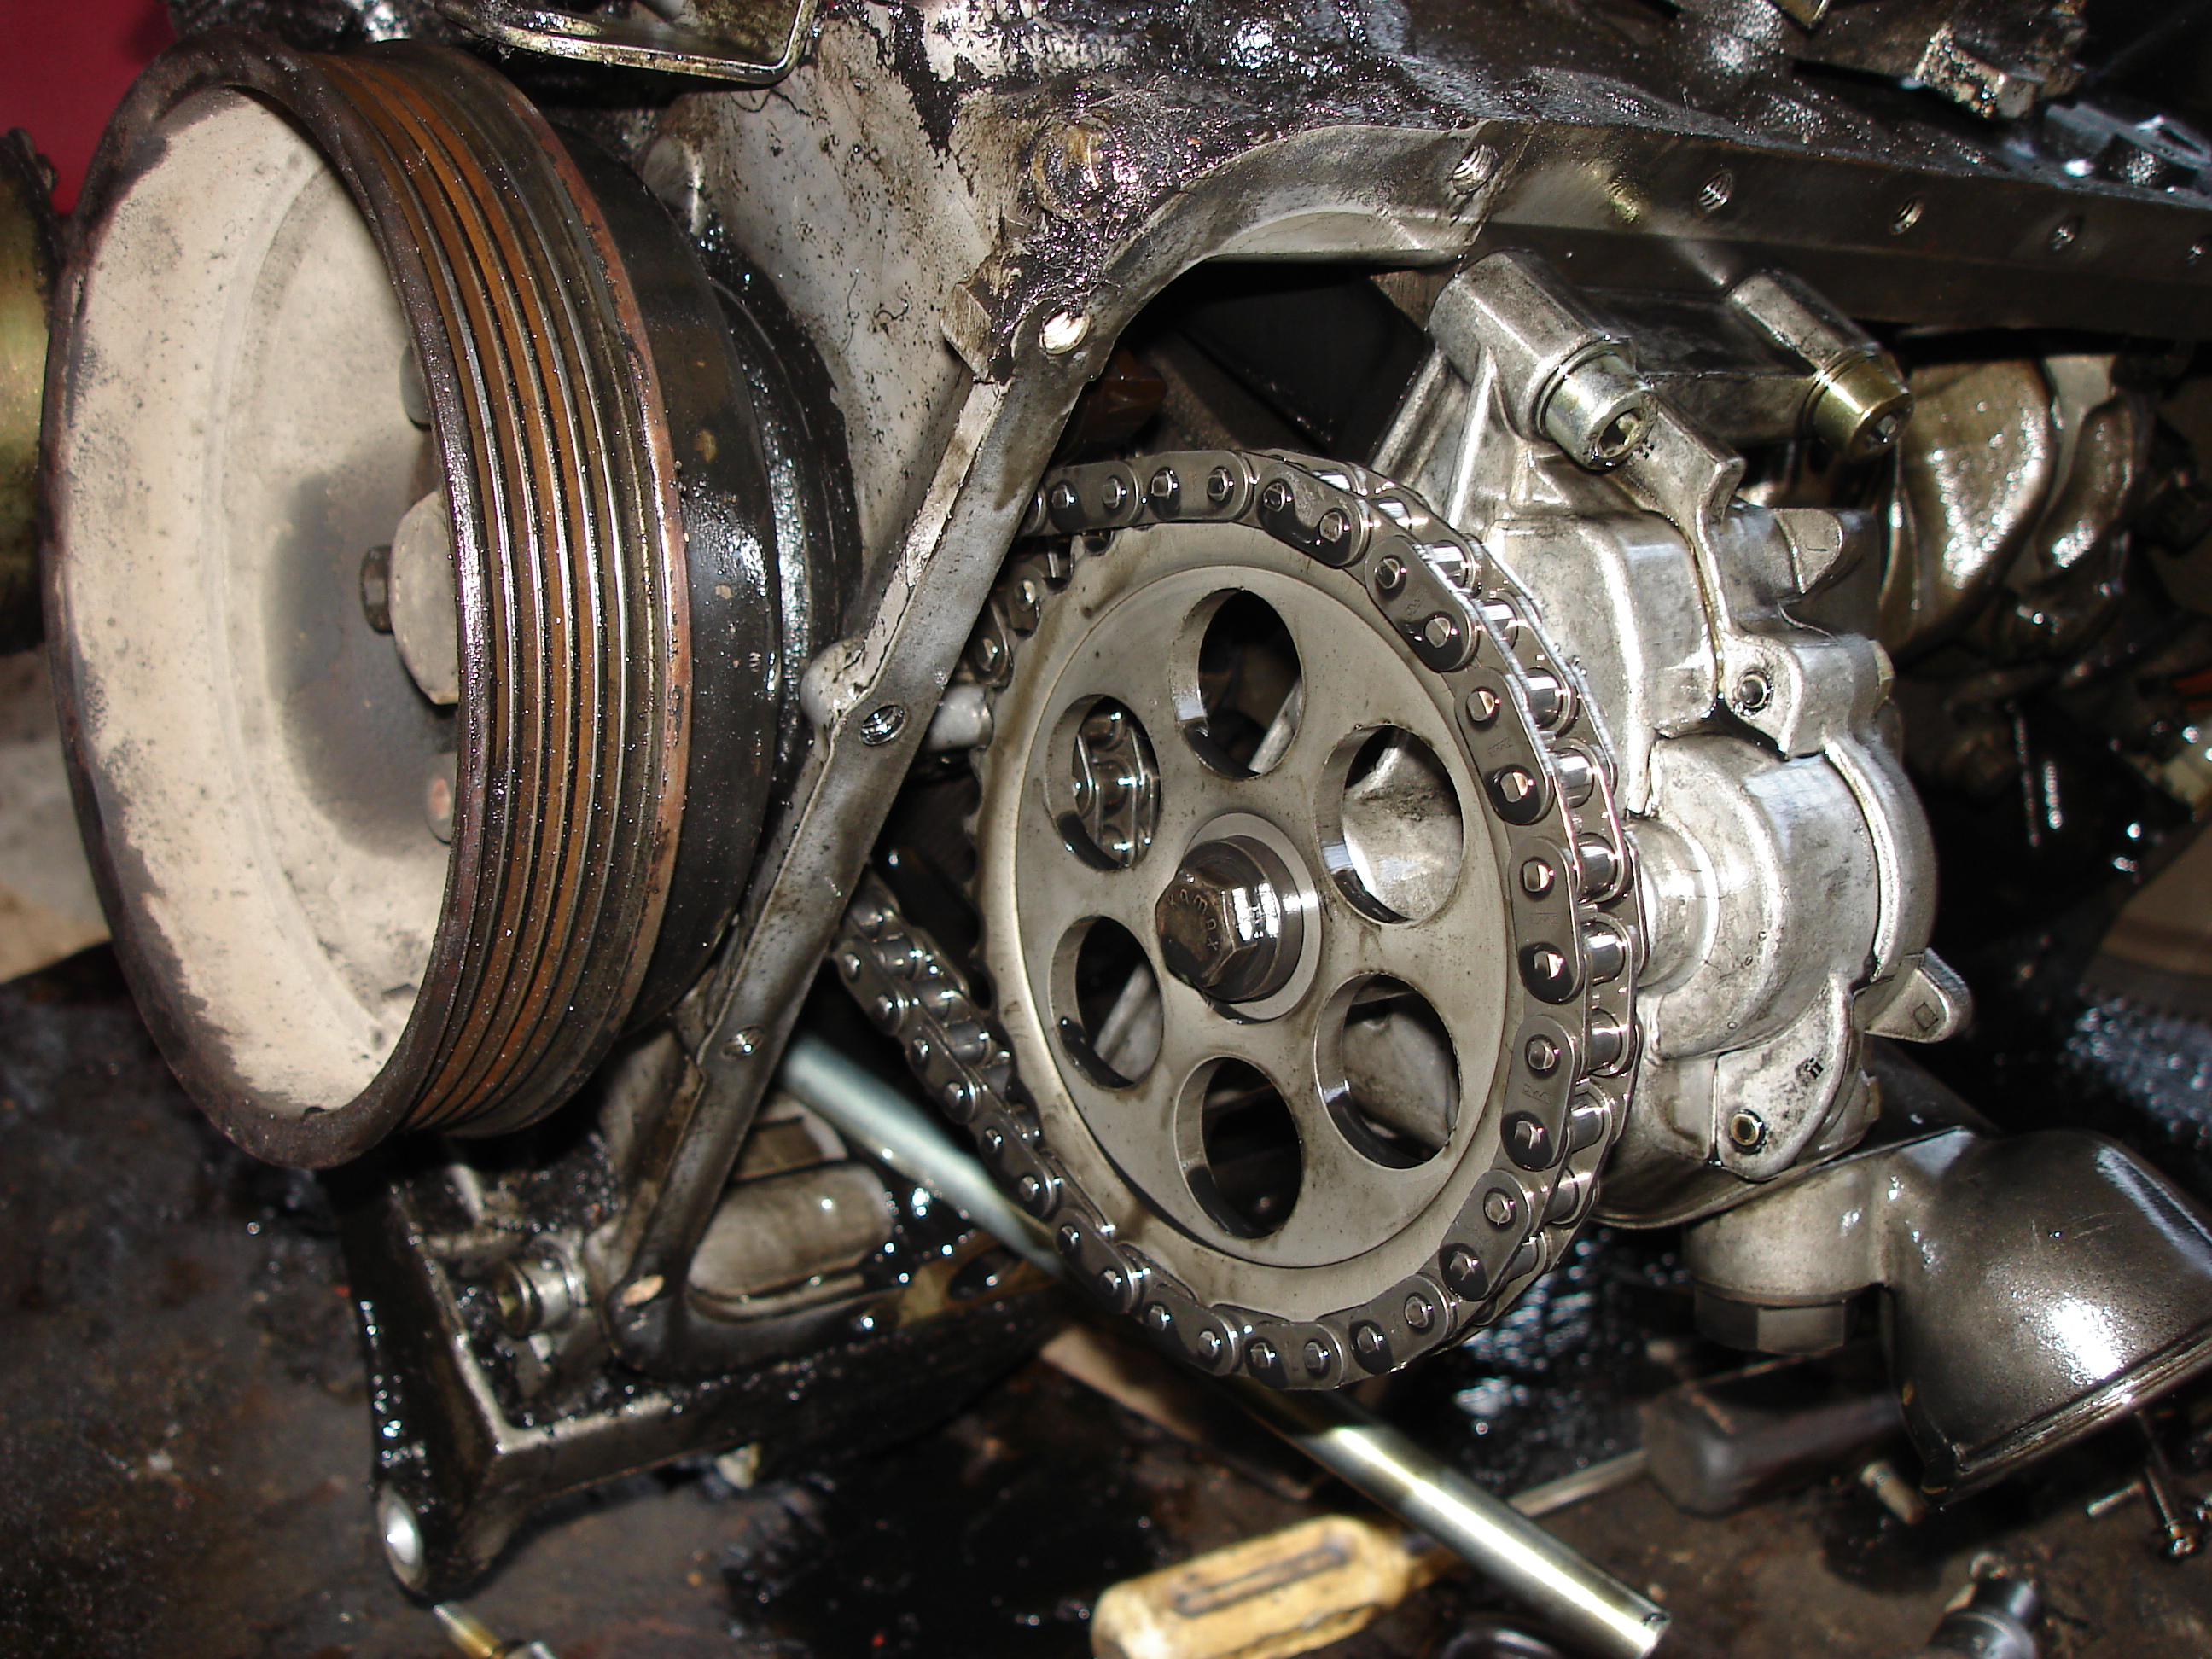 File:A close view of OM601 diesel engine oil pump..JPG - Wikimedia ...